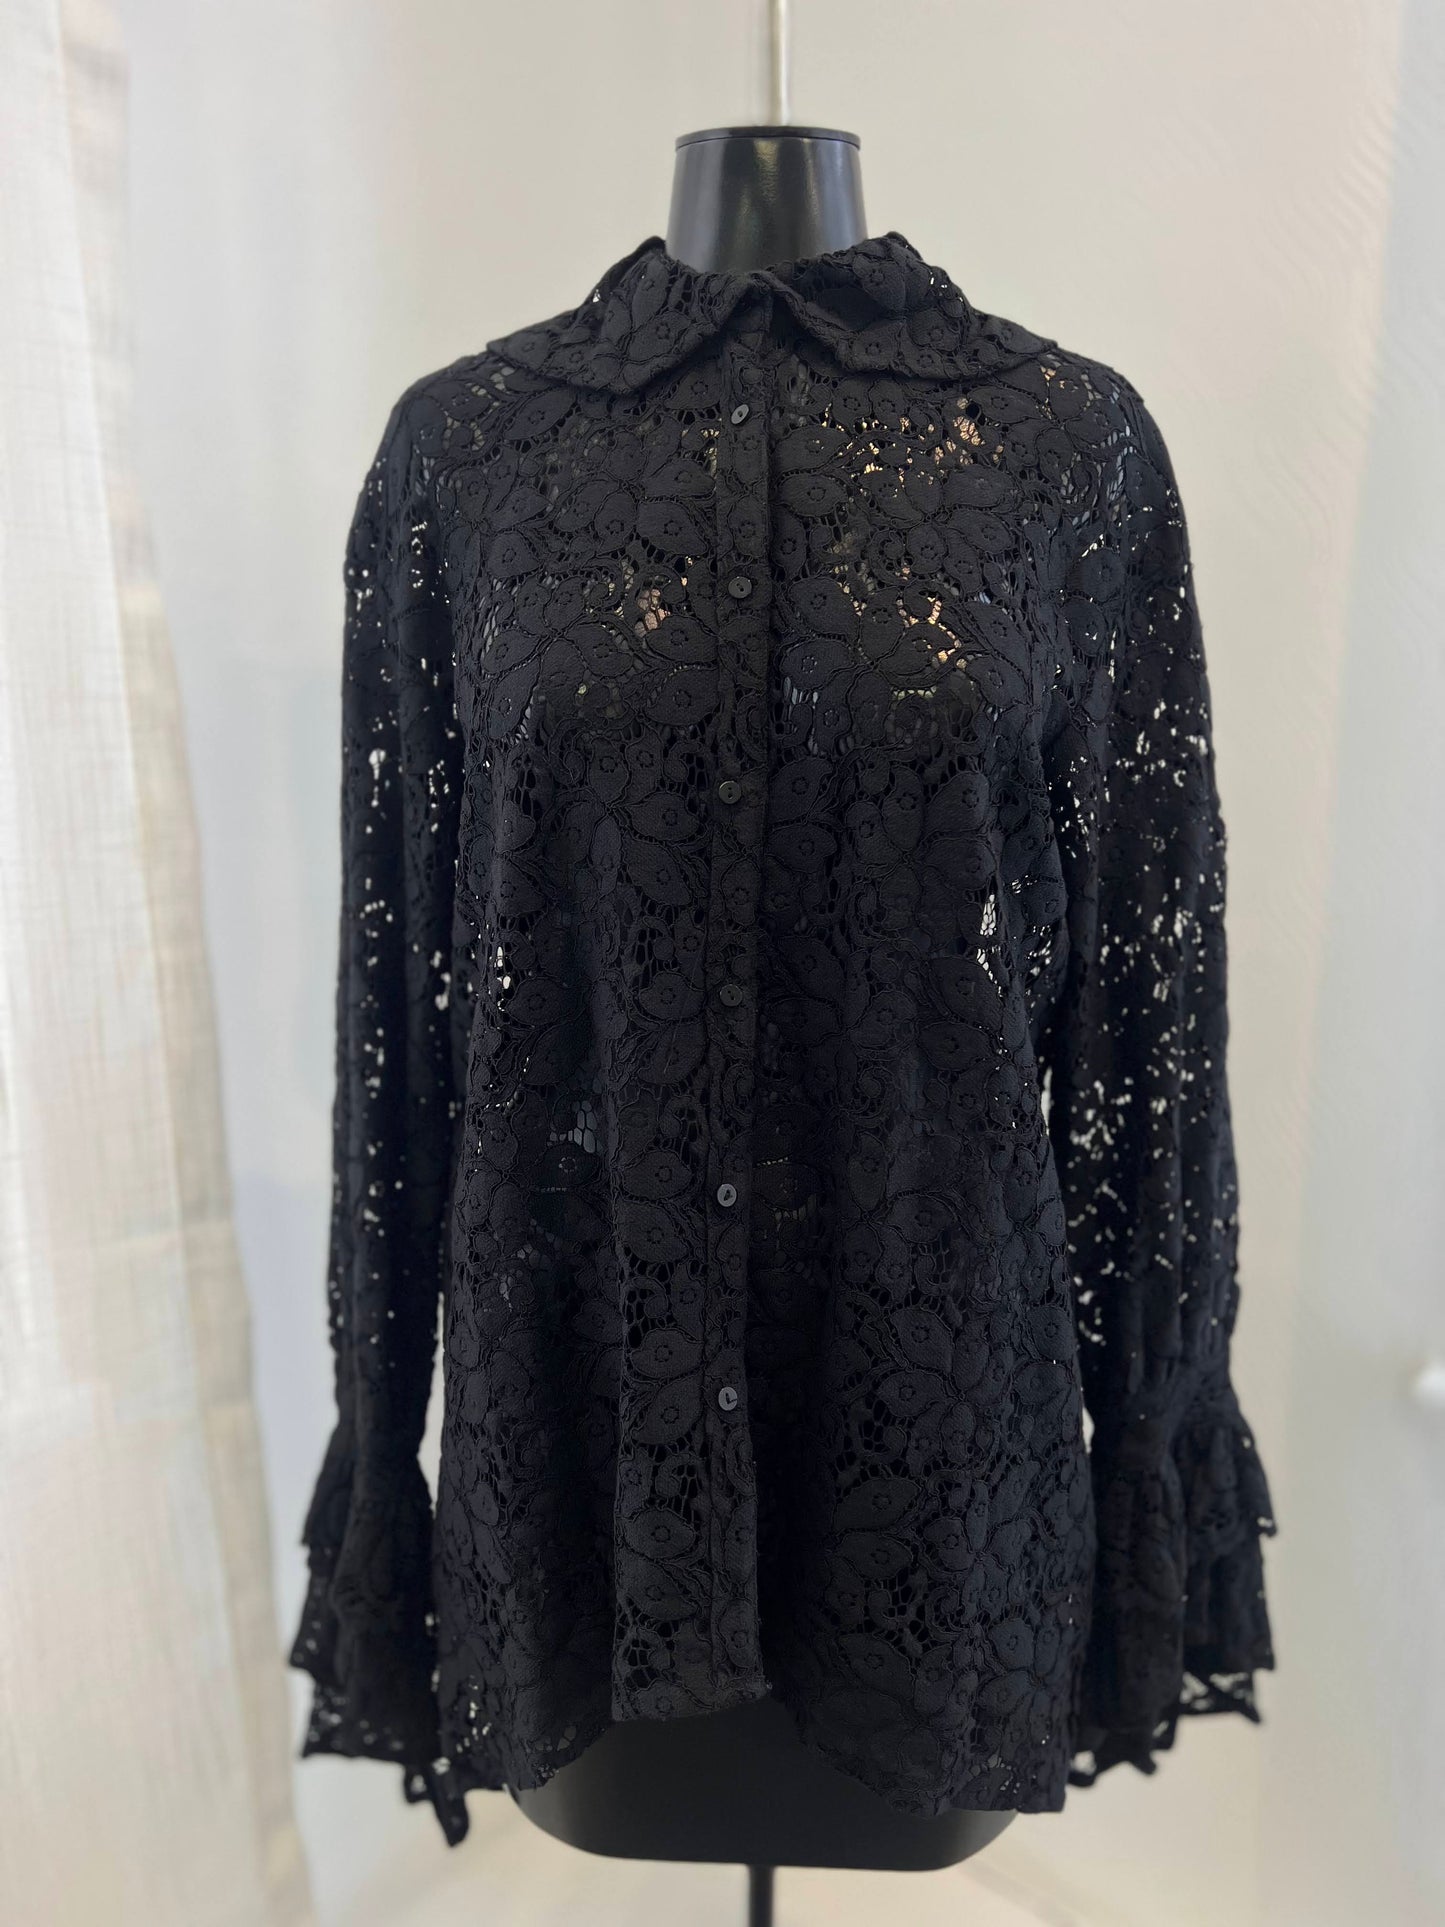 Black Lace Long Sleeve Shirt